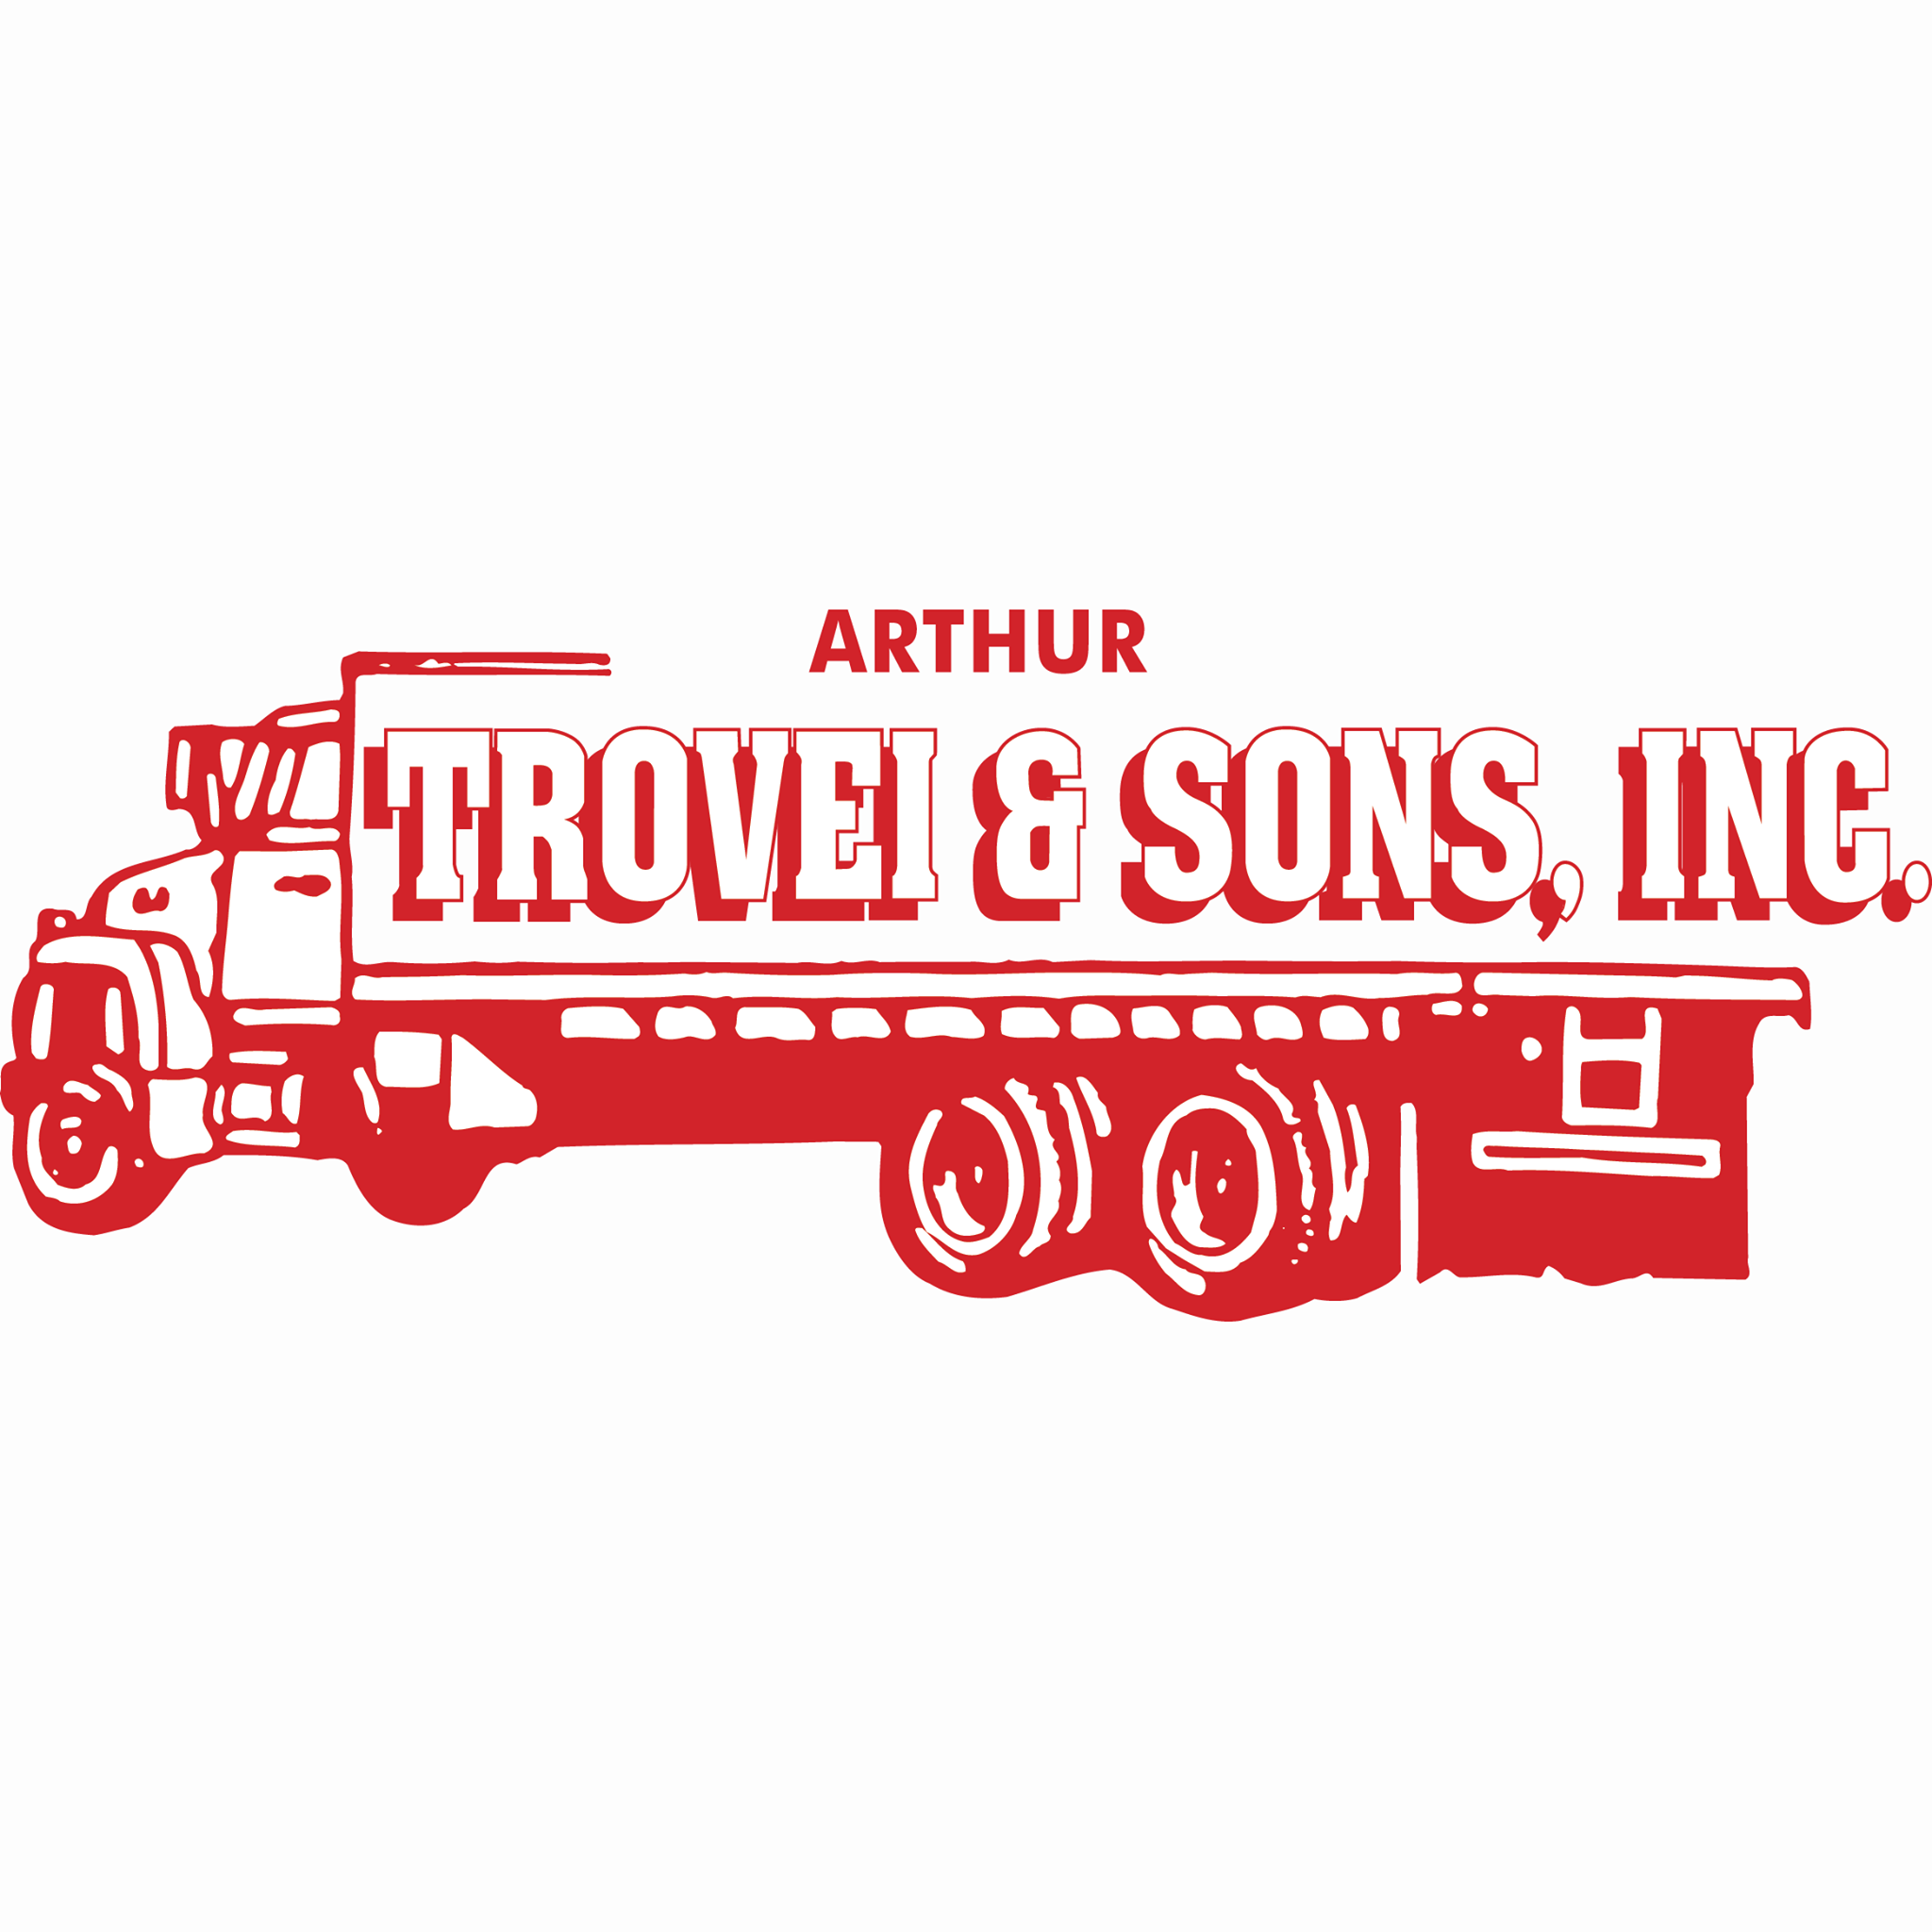 Arthur Trovei & Sons